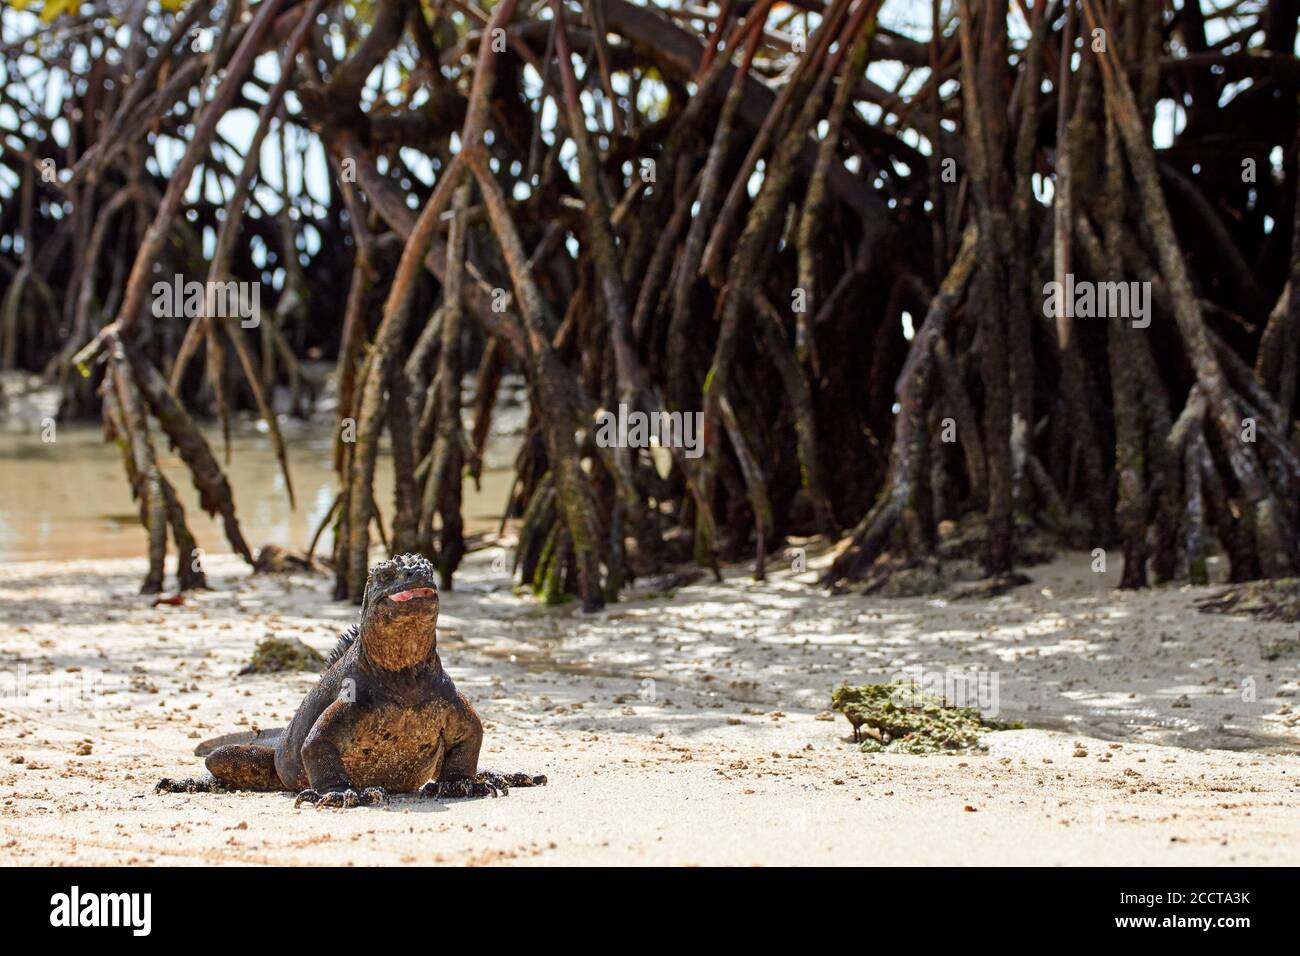 Marine Iguana Sunbathing Near Mangroves At Playa Escondida Galapagos Ecuador Stock Photo Alamy